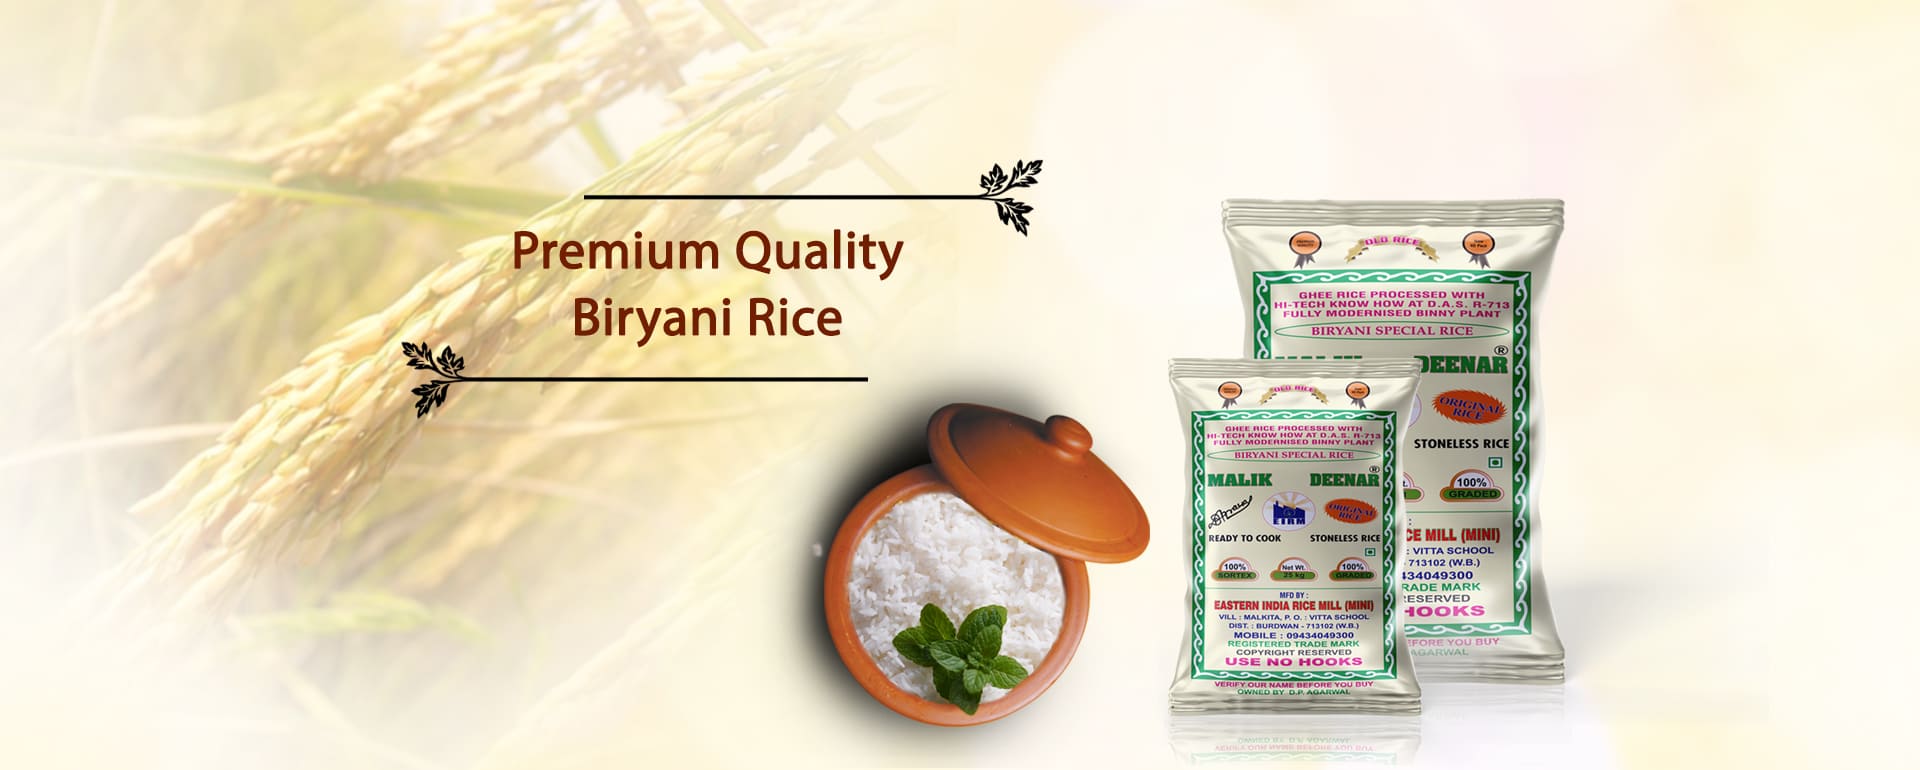 gobindo bhog rice manufacturers in india